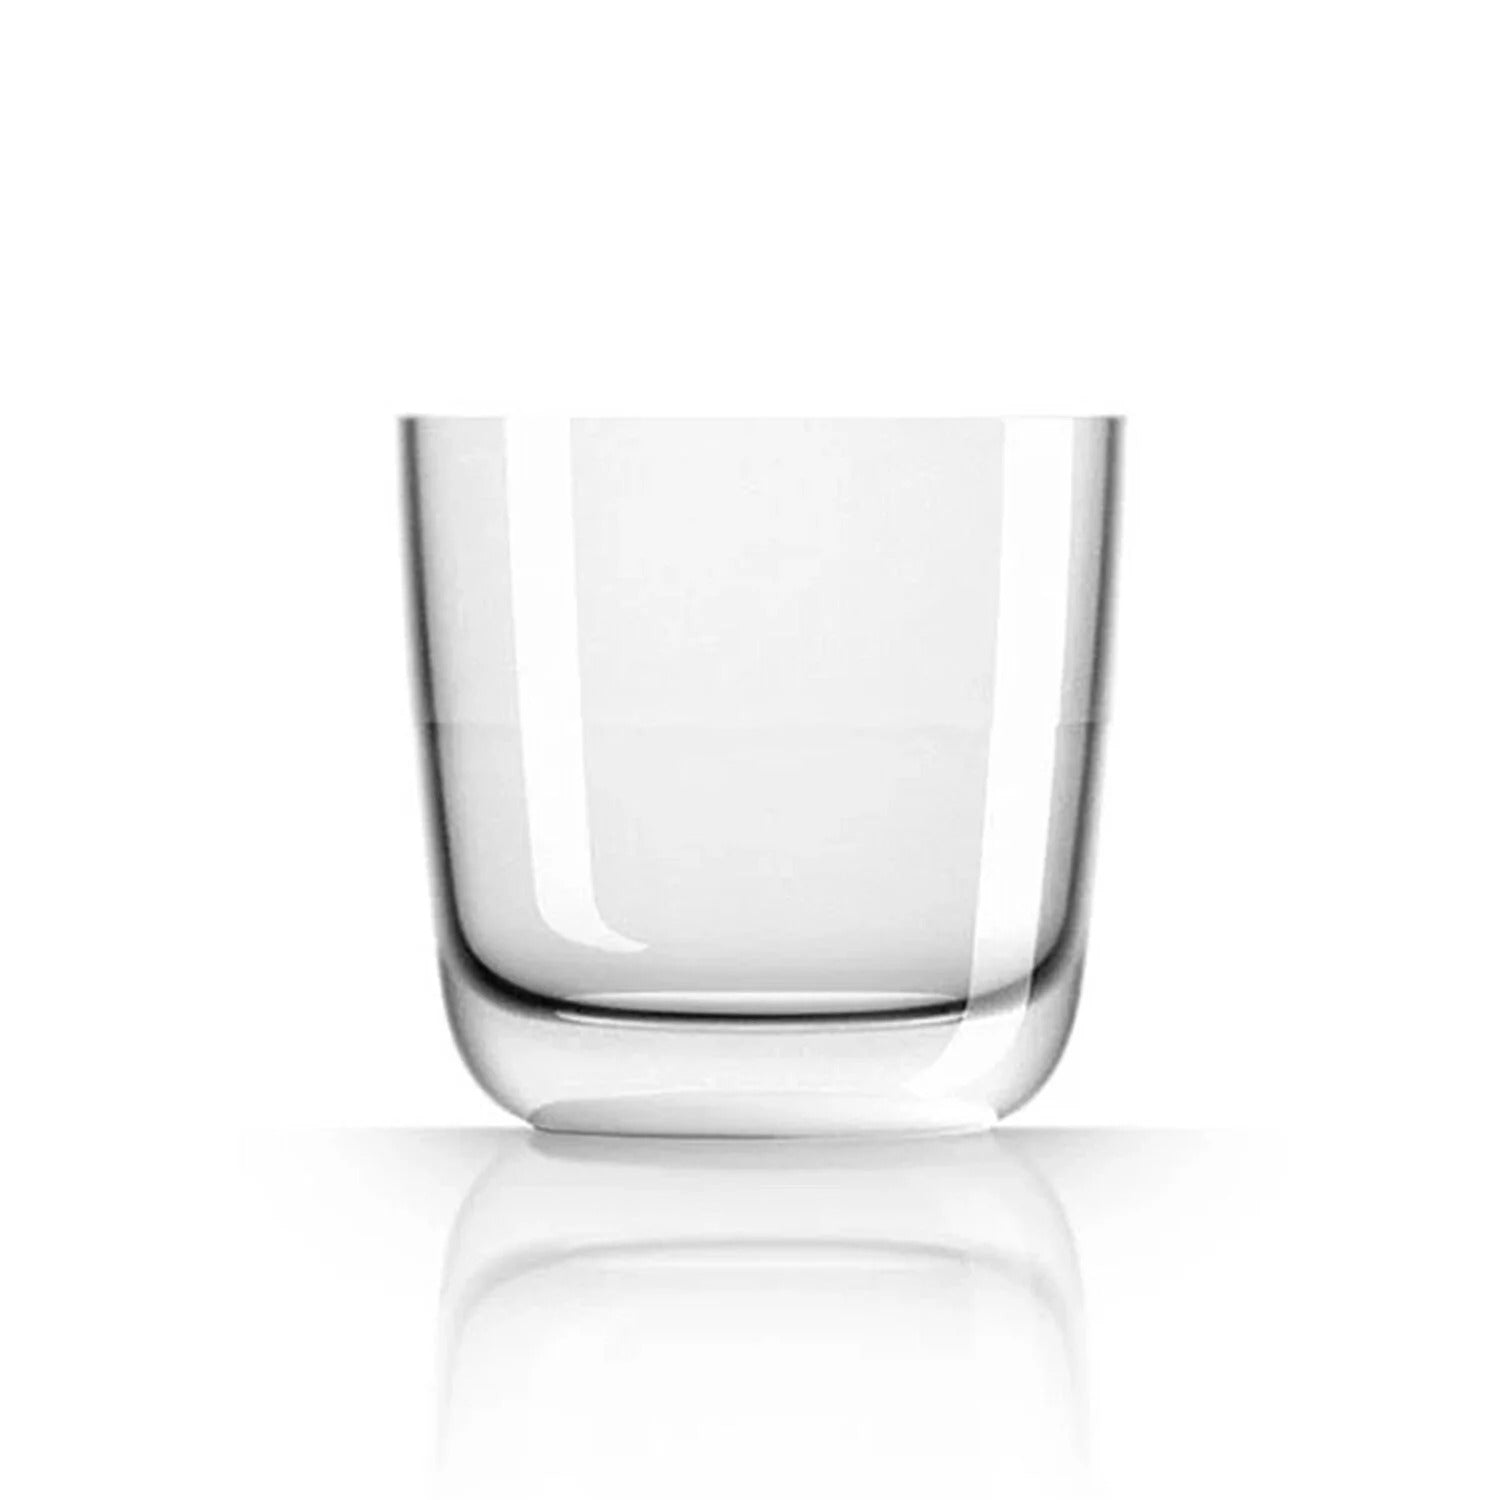 marc newson | whisky glass | white base set of 4